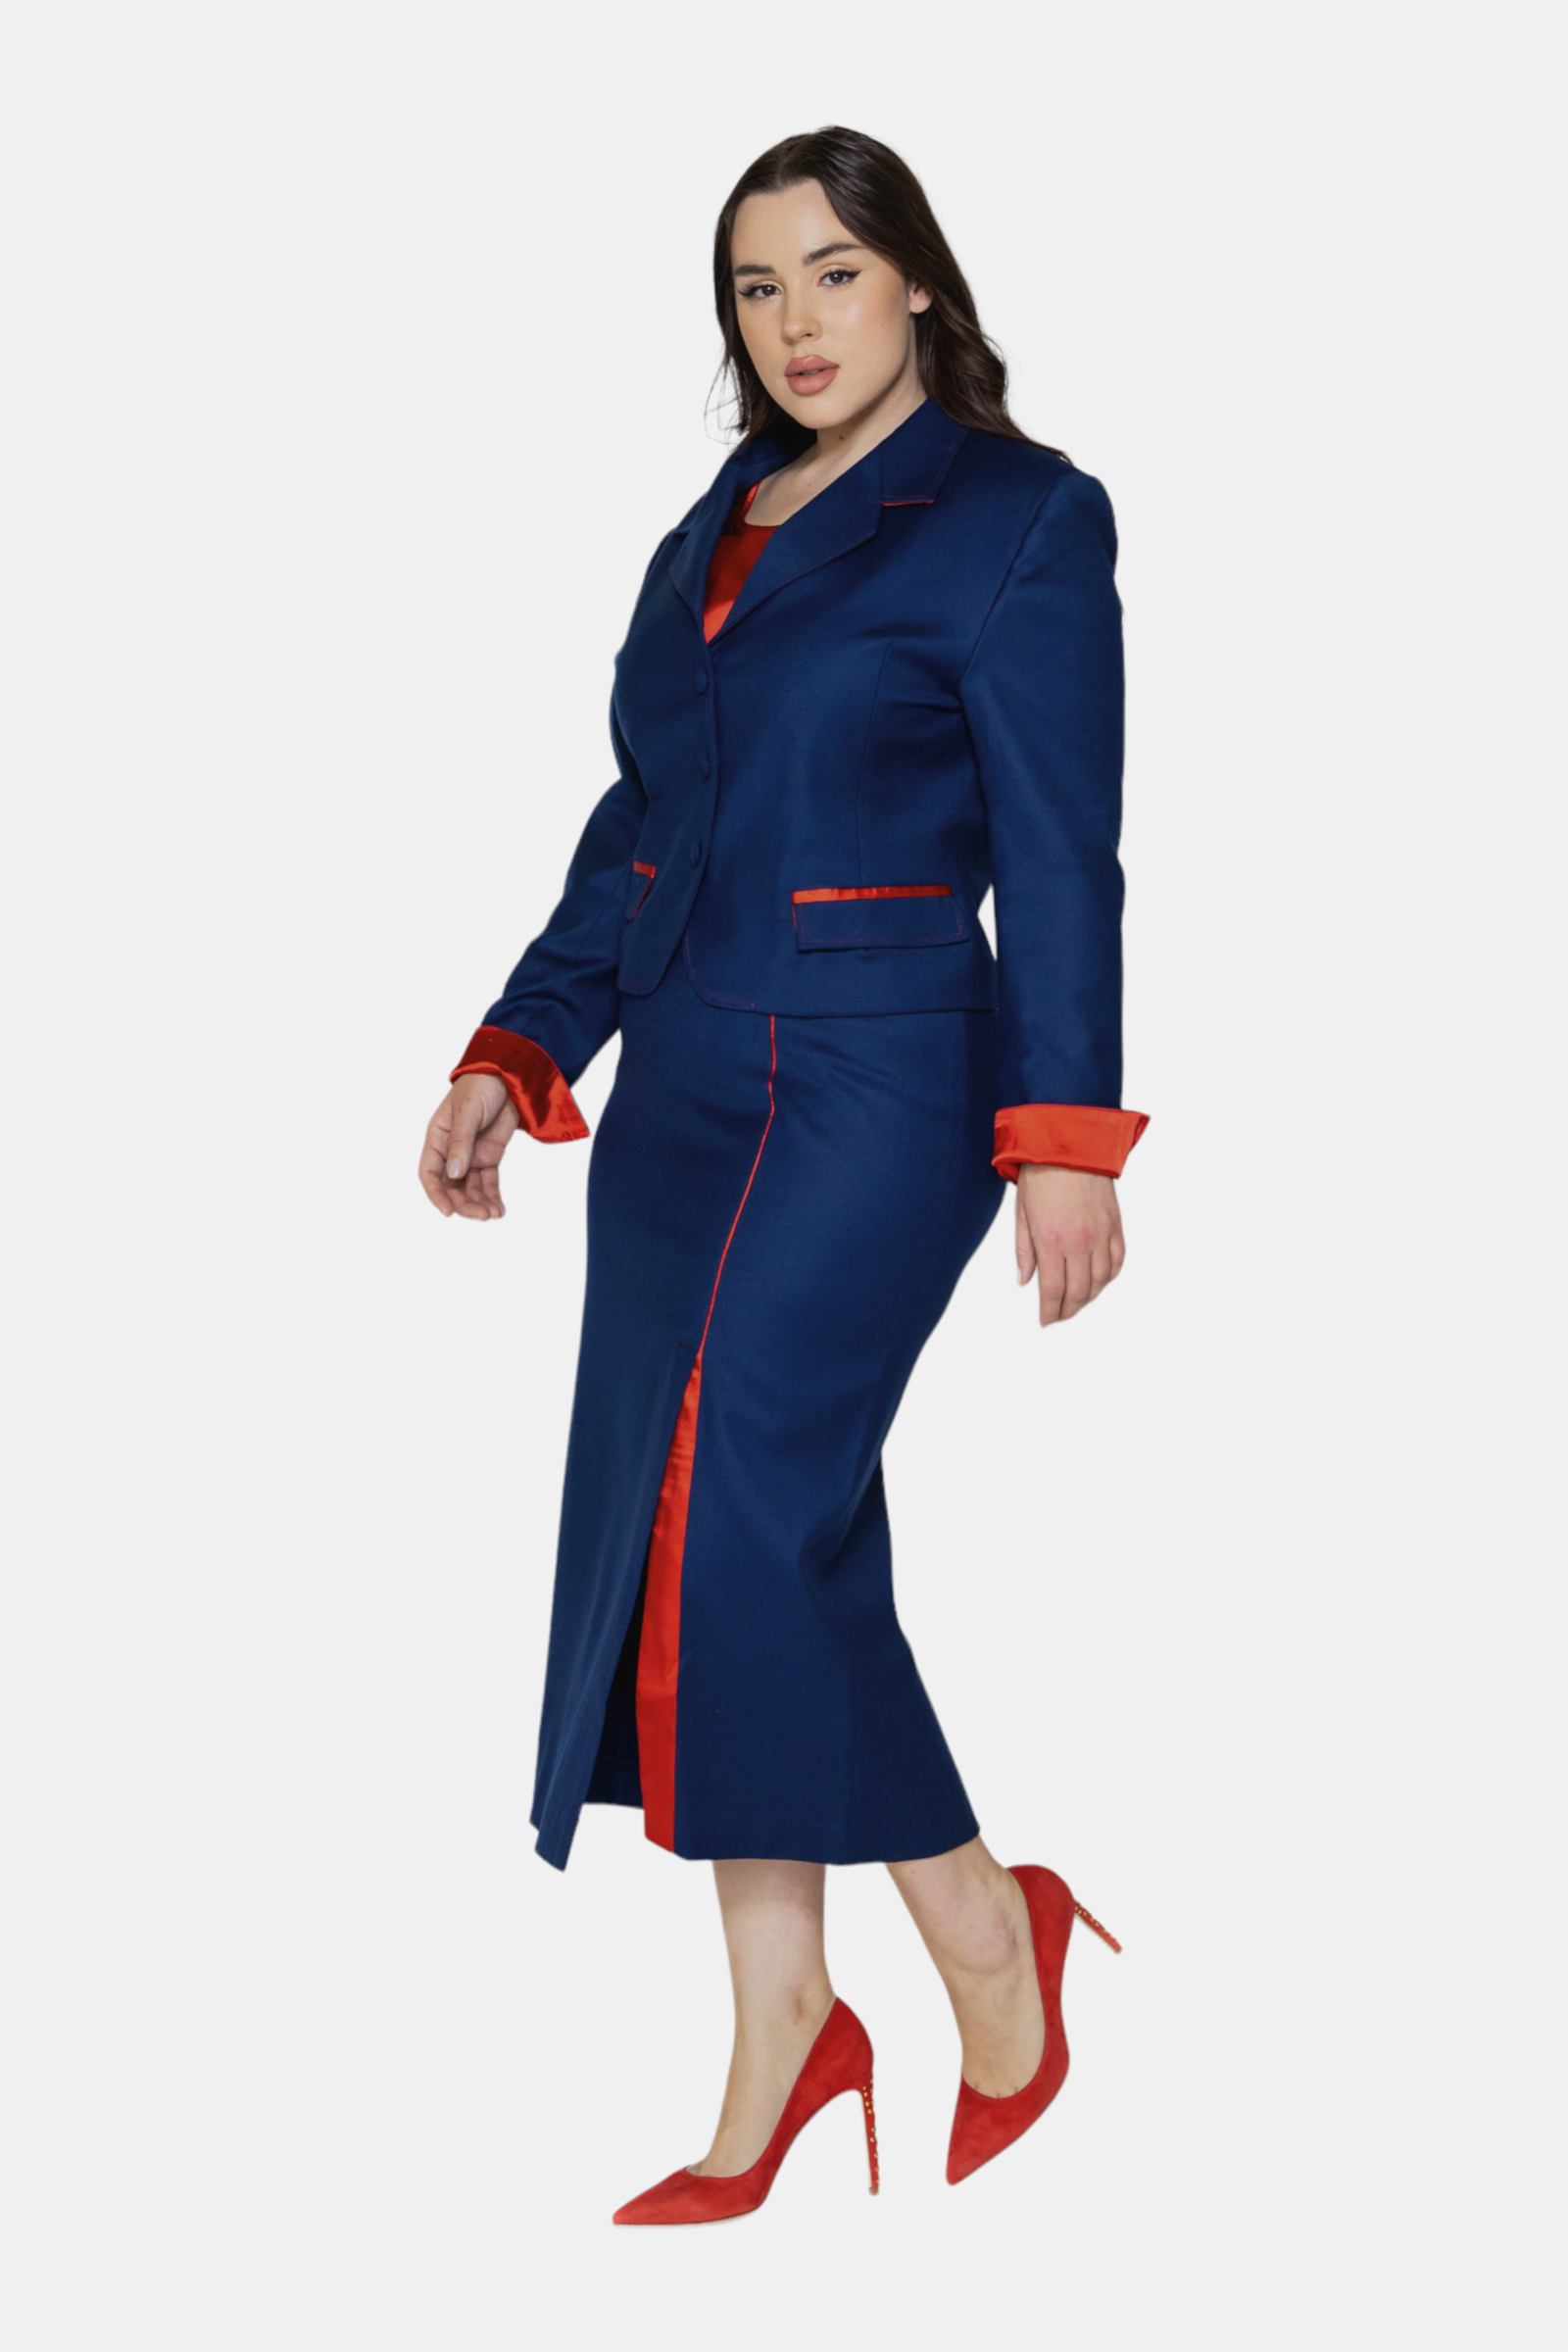 Sara Sabella 2-Piece Set Navy Blue Jacket & Midi Skirt Suit Set Plus Size- Made in Italy Women's Suit Clothing